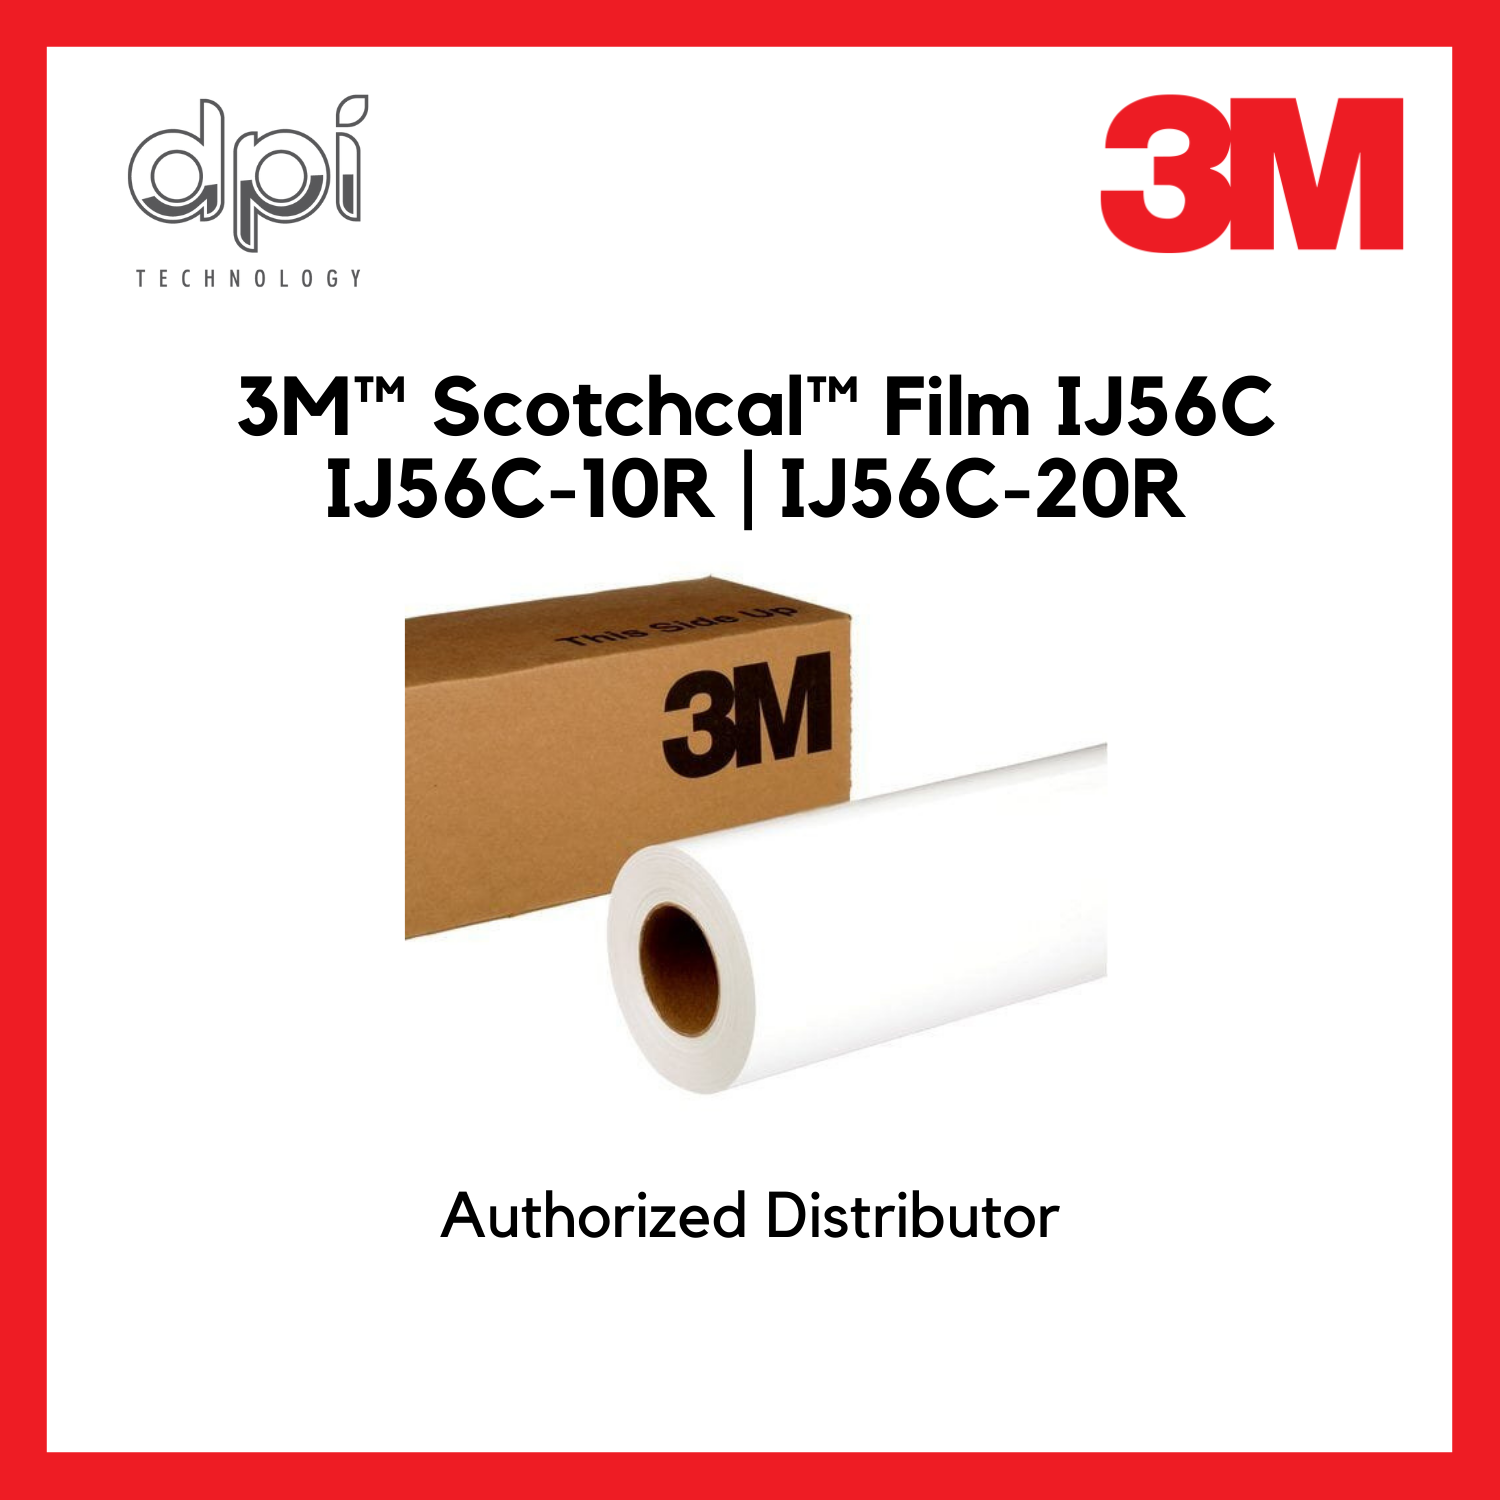 3M Scotchcal Film IJ56C